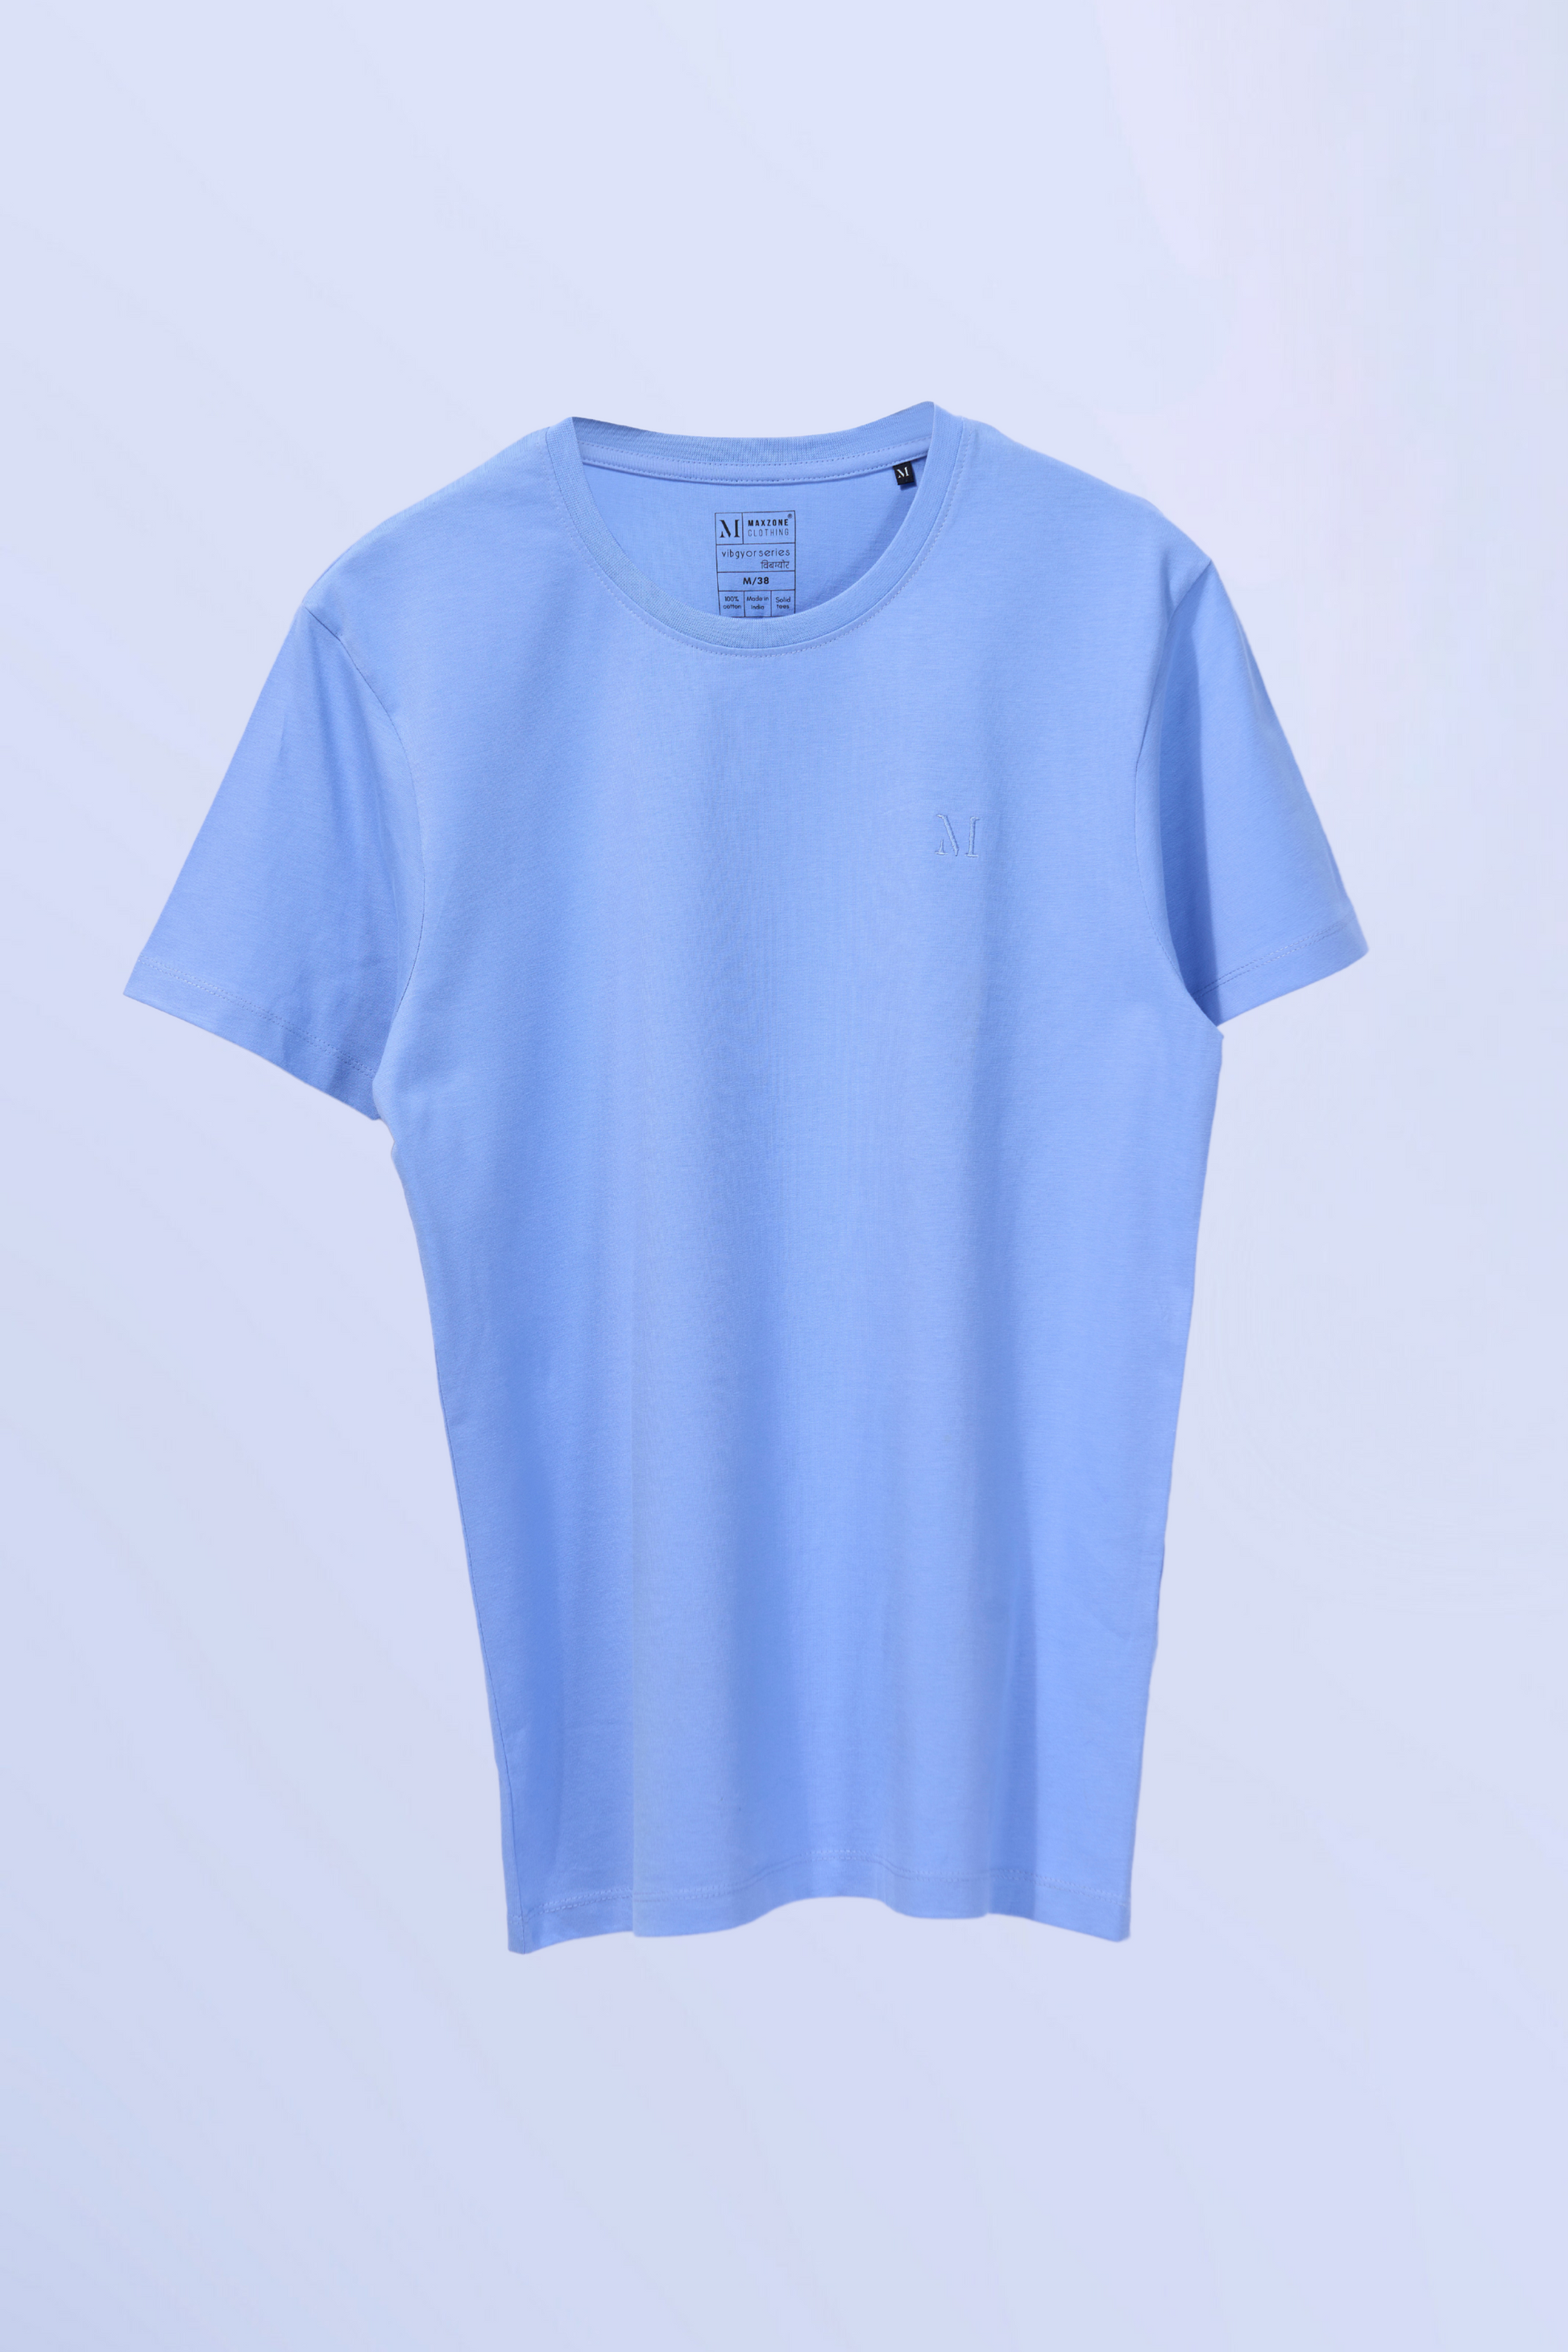 Holiday T-Shirts Combo T-shirts Maxzone Clothing   